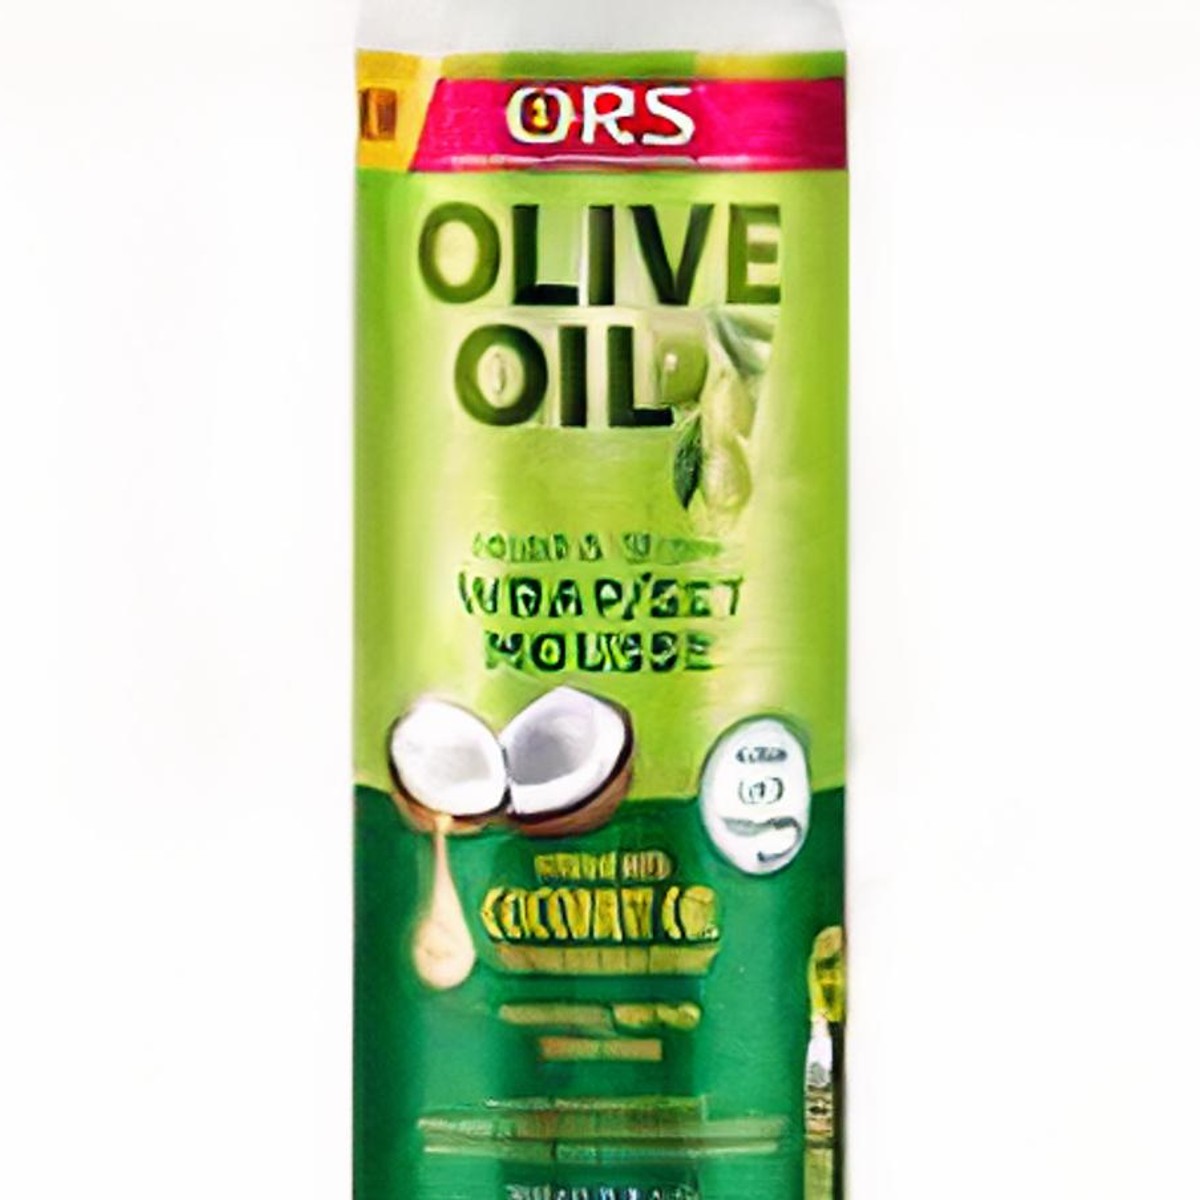 Eco Style Styling Gel, Olive Oil Gel 32 Ounce (Including Handle Nylon  Bristle Hair Brush, Bone